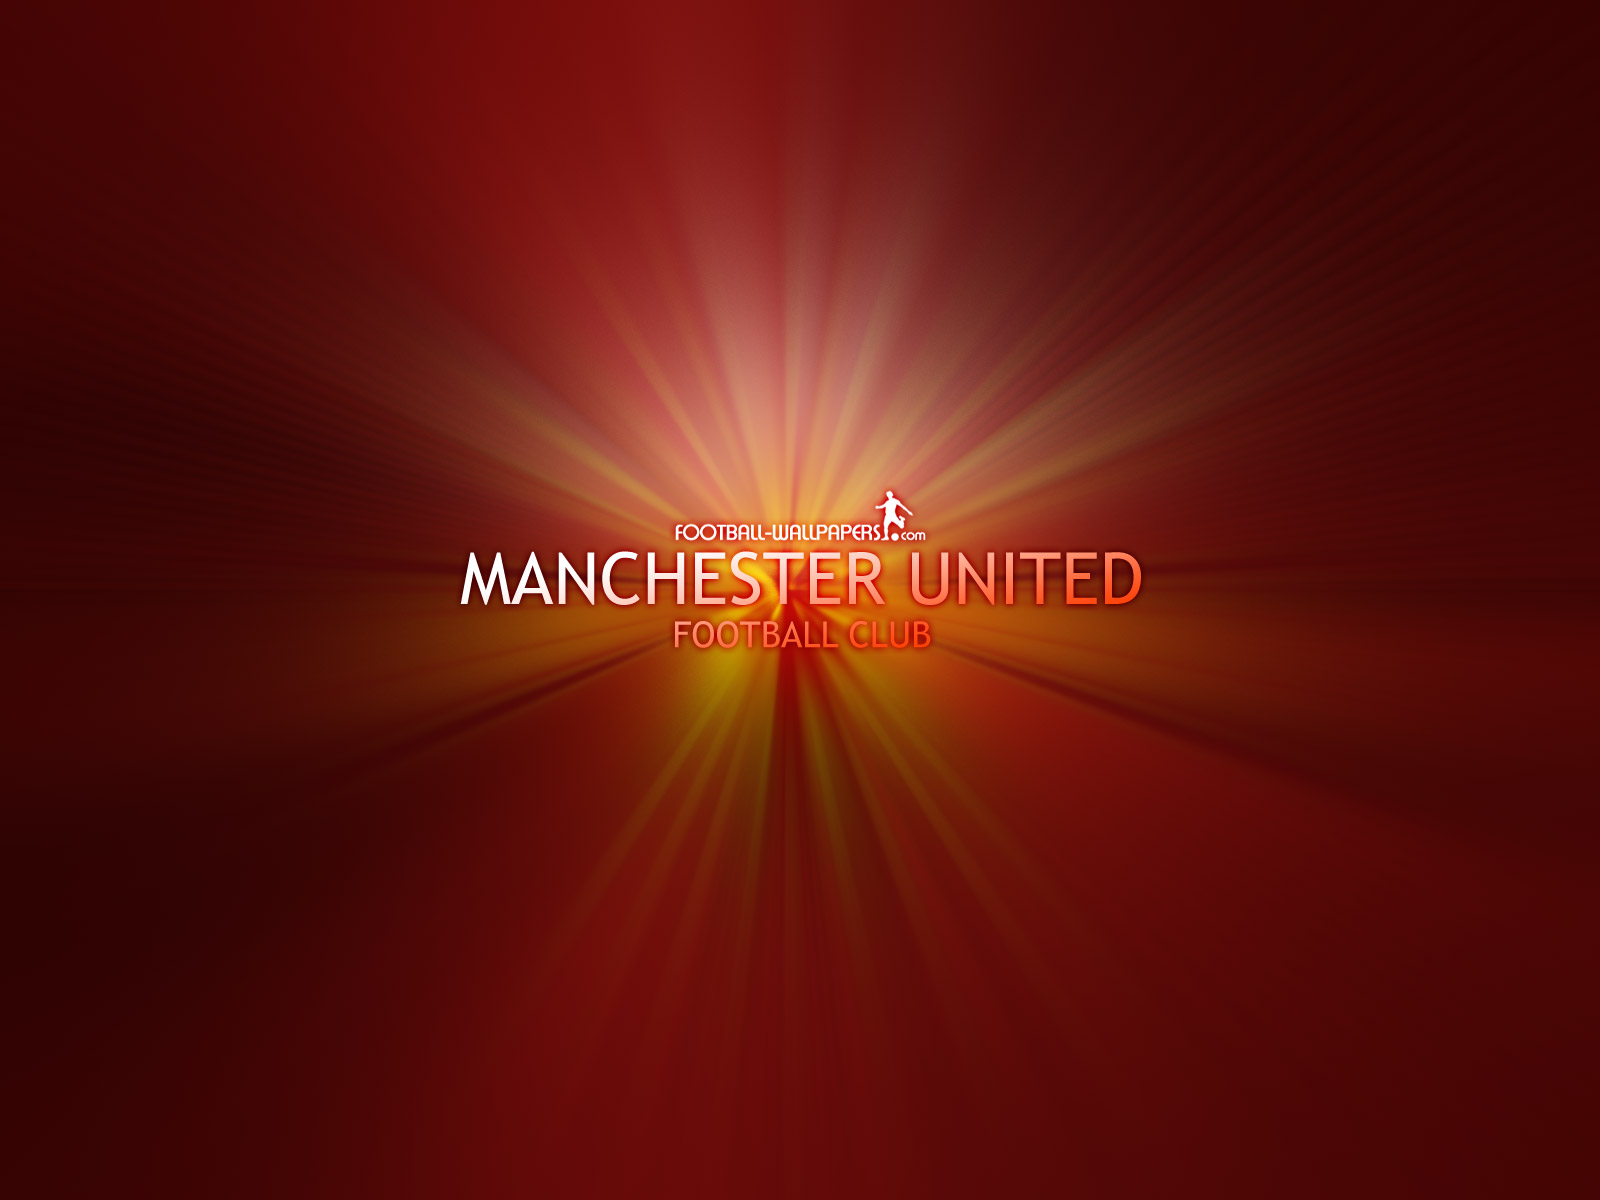 https://blogger.googleusercontent.com/img/b/R29vZ2xl/AVvXsEh_YIafIpwJCDdjEg4obQQwcf-5-CIGuULL8iagFaTc0u3mpa56JDfx38m8UMvSMWurTWgSwfbe6lWyDk9eY0O4UBynu2AOKeu8AVxAPt2aQ8JSCHp5R0Mrrrv5jT8UYf4JhbMx6uVABpM/s1600/Manchester+United+Wallpaper.jpg